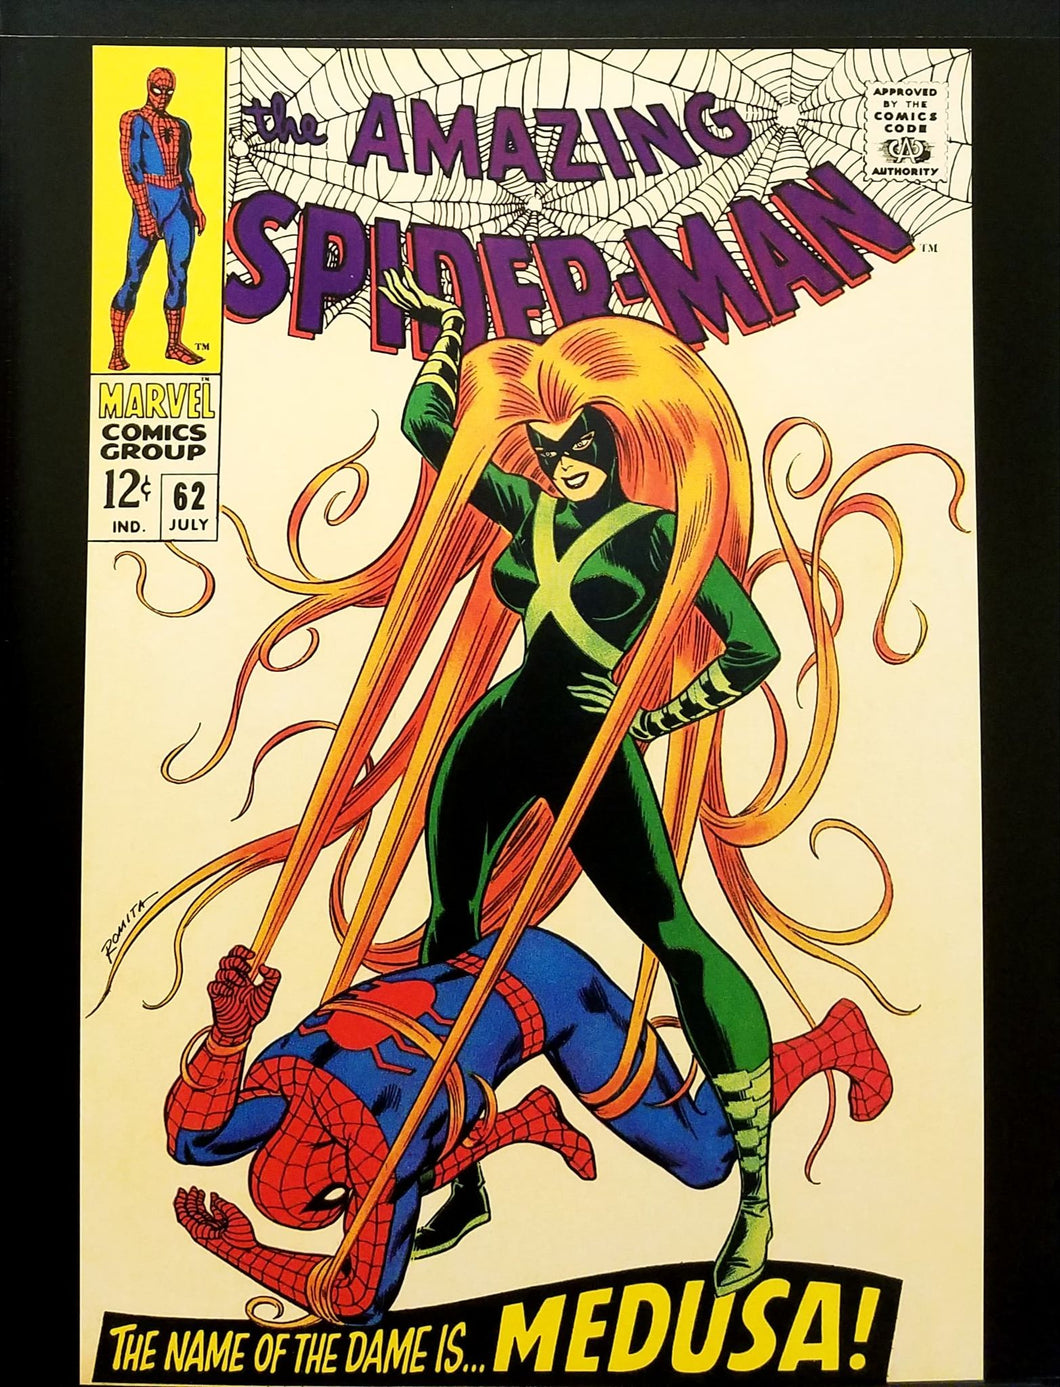 Amazing Spider-Man #62 by John Romita 11x14 FRAMED Art Print, Vintage Marvel Comics